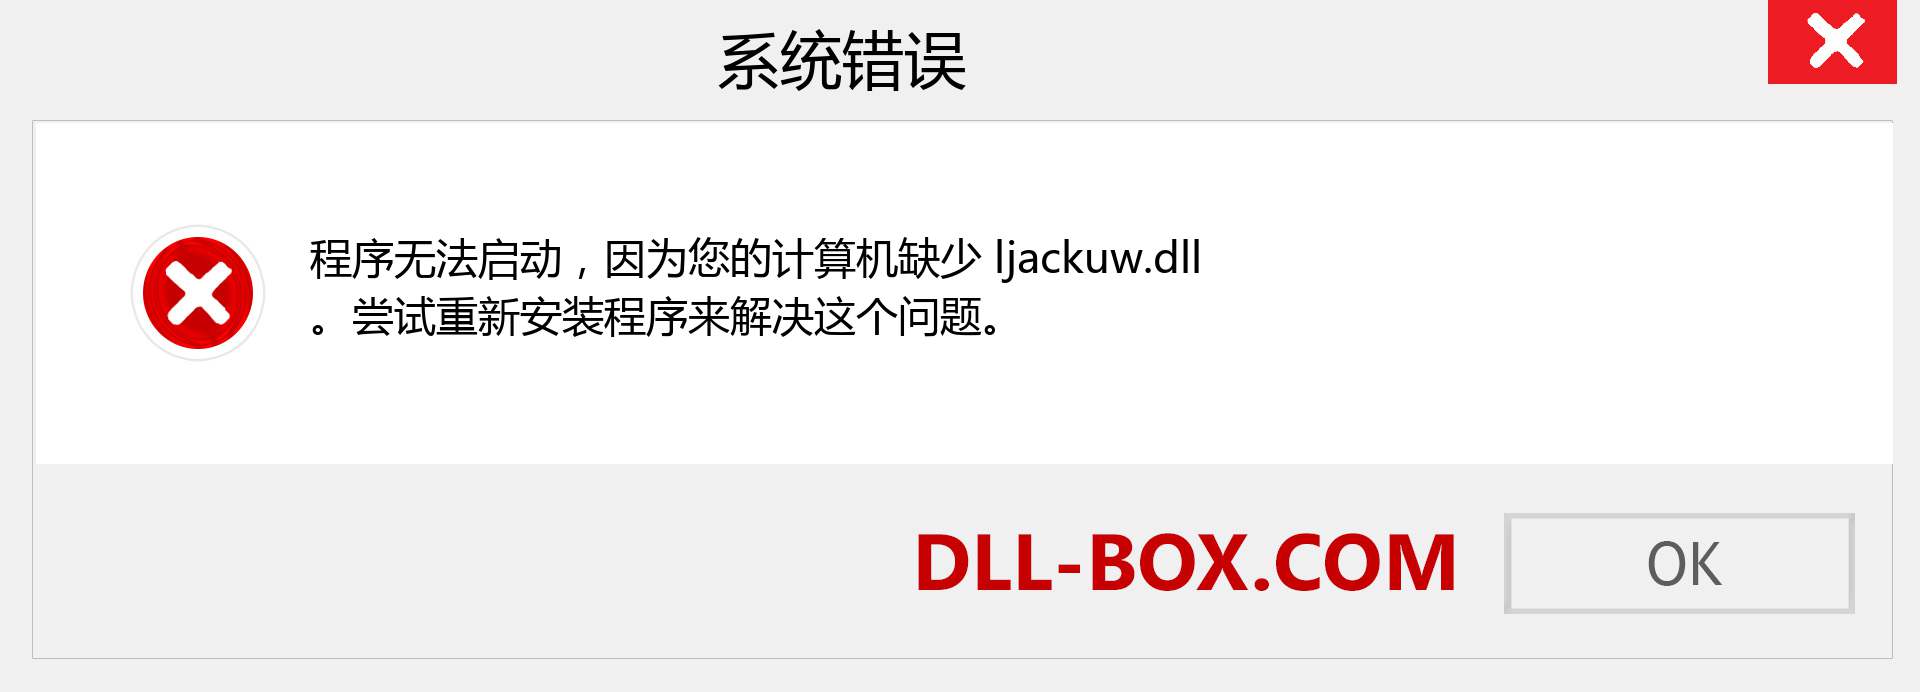 ljackuw.dll 文件丢失？。 适用于 Windows 7、8、10 的下载 - 修复 Windows、照片、图像上的 ljackuw dll 丢失错误